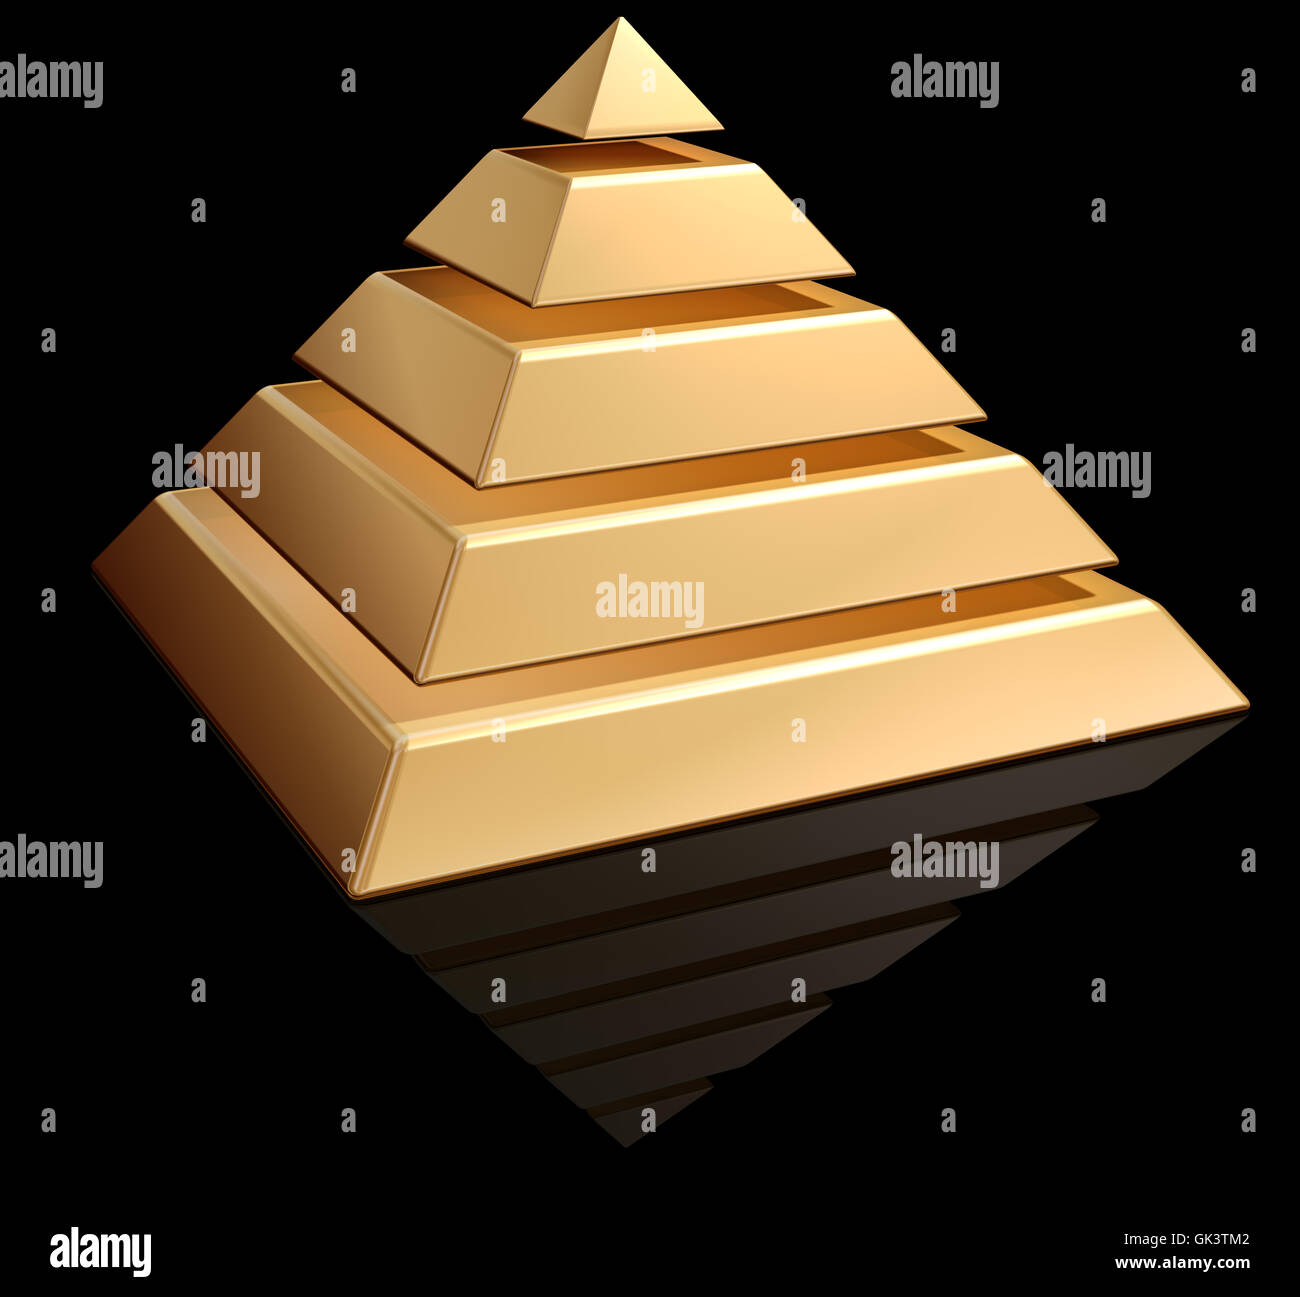 Pyramid Shapes Stock Photos & Pyramid Shapes Stock Images - Alamy